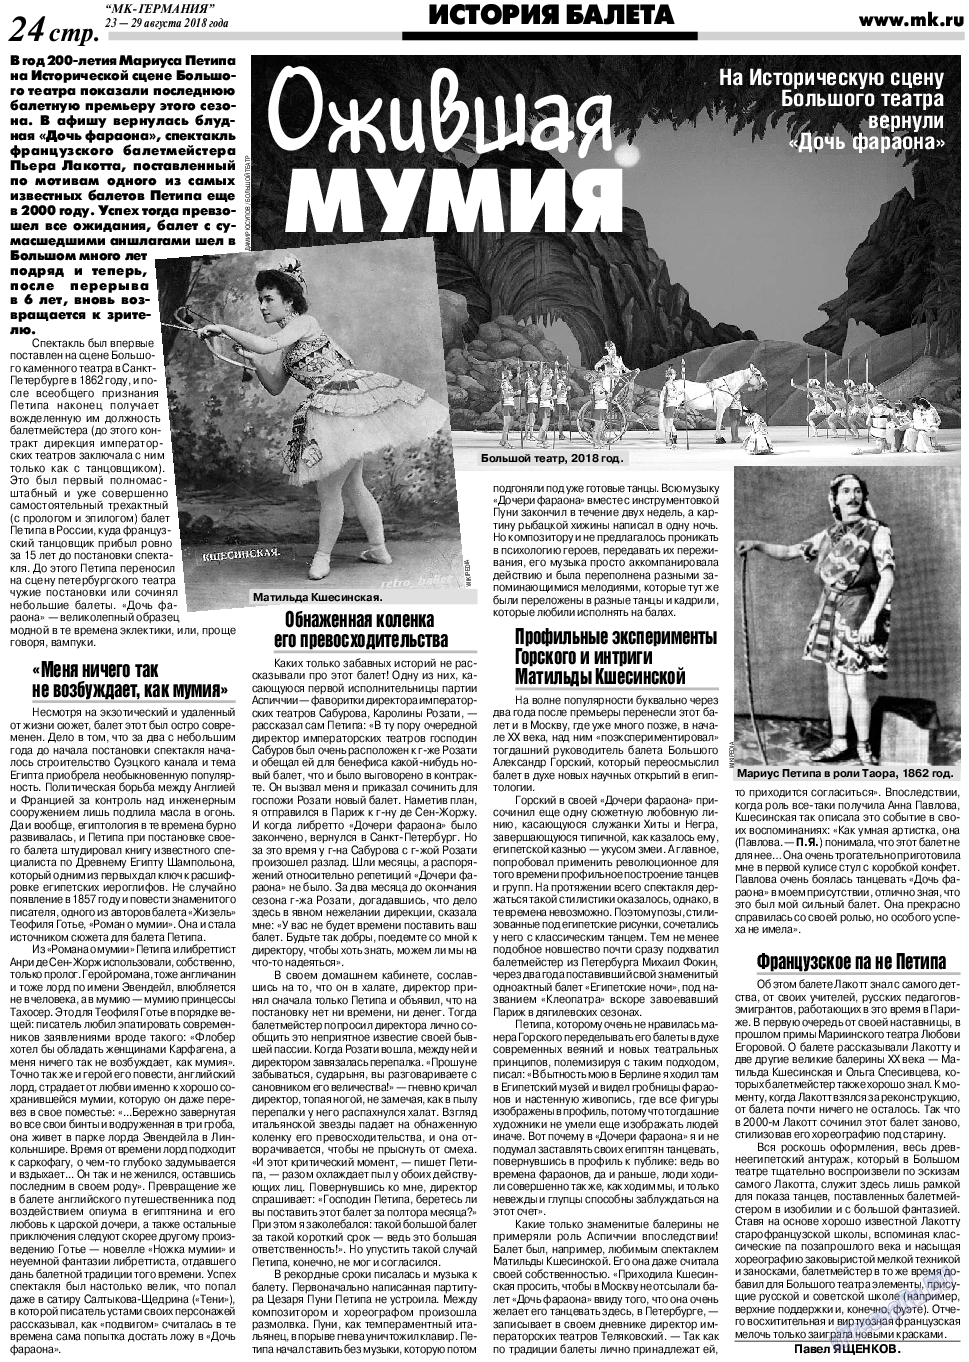 МК-Германия, газета. 2018 №35 стр.24